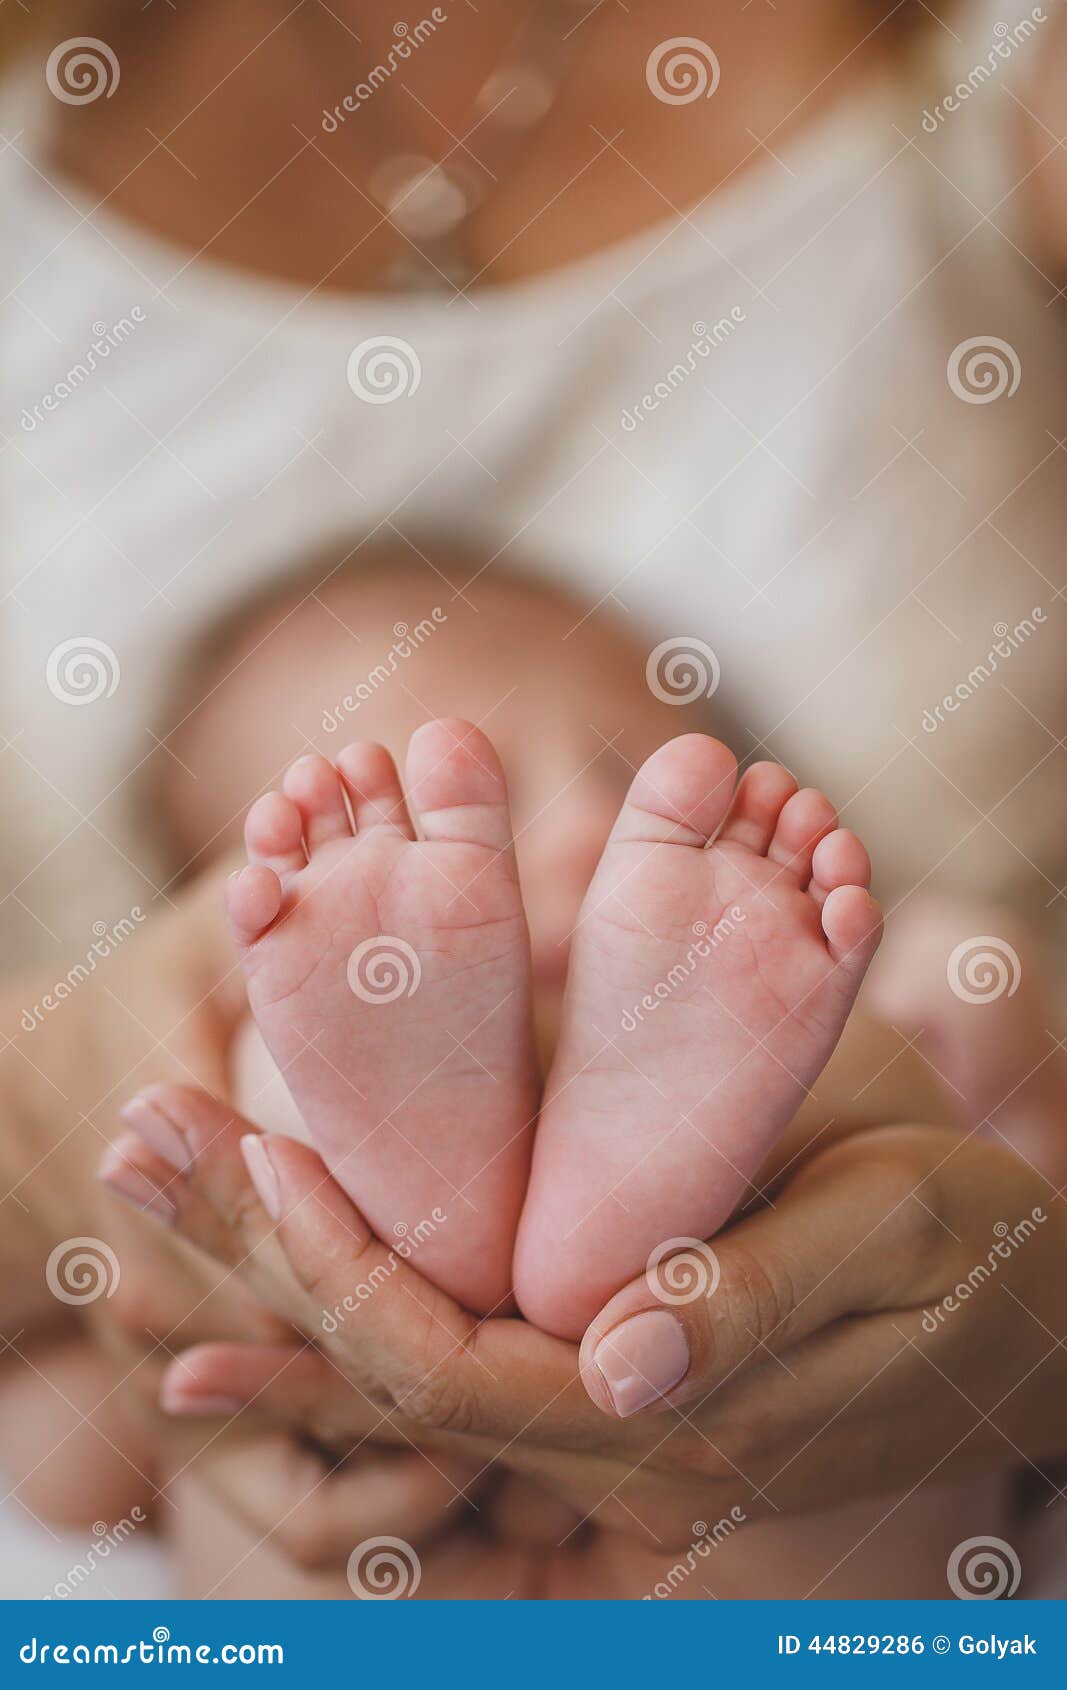 The Newborns Legs In Gentle H